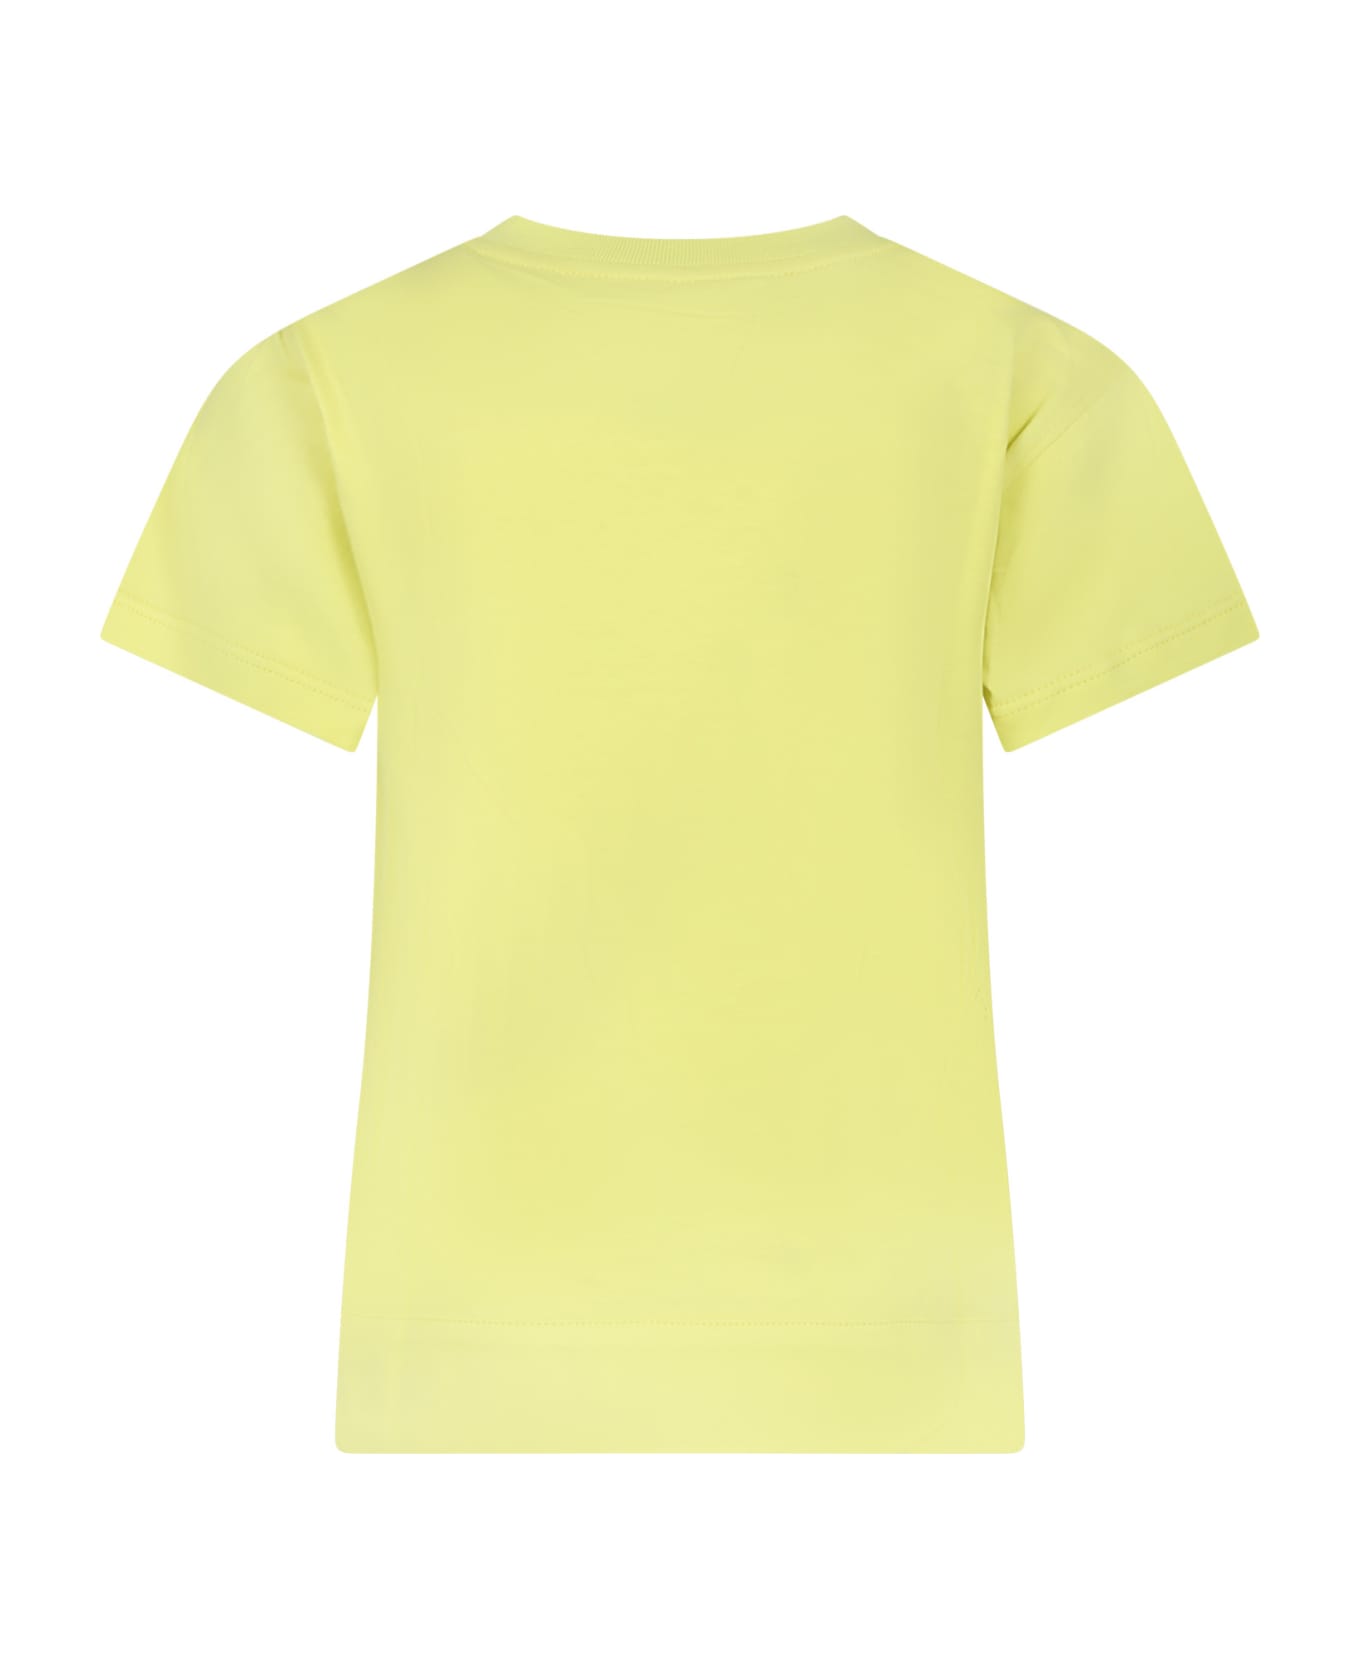 Philosophy di Lorenzo Serafini Kids Yellow T-shirt For Girl With Logo - Yellow